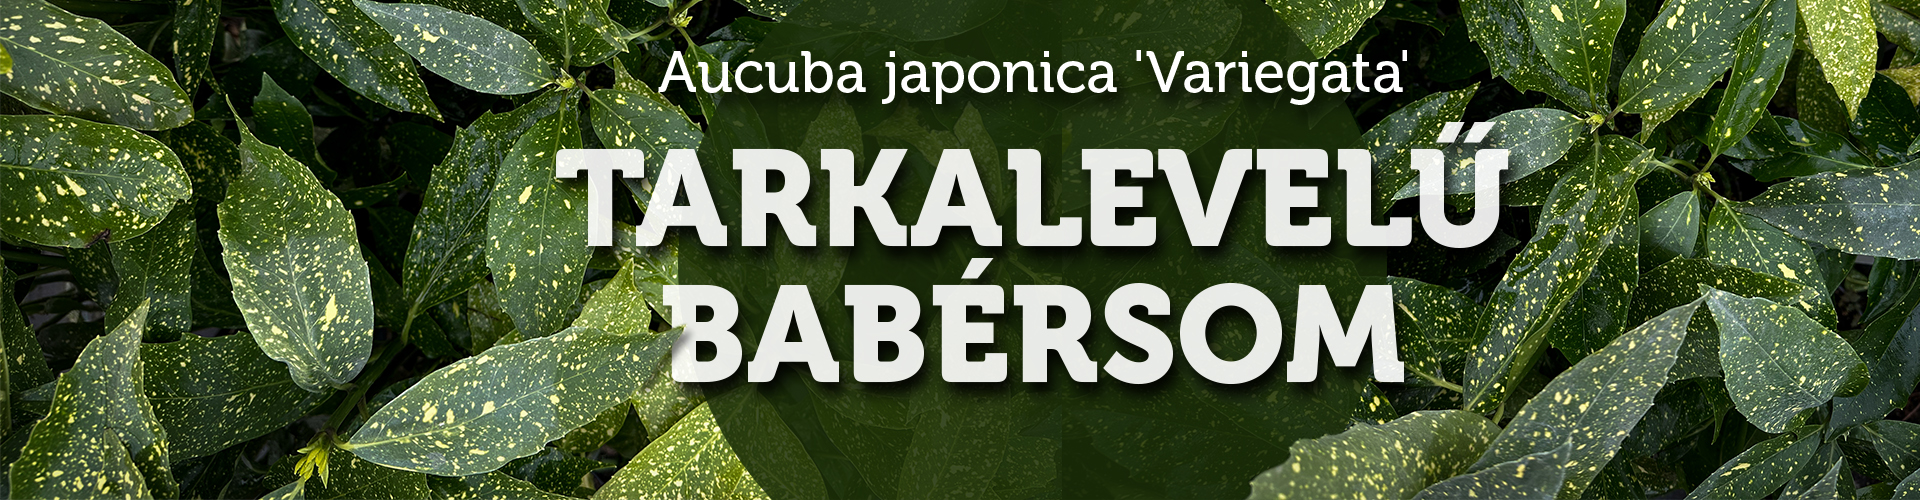 Aucuba japonica 'Variegata' - Tarkalevelű babérsom